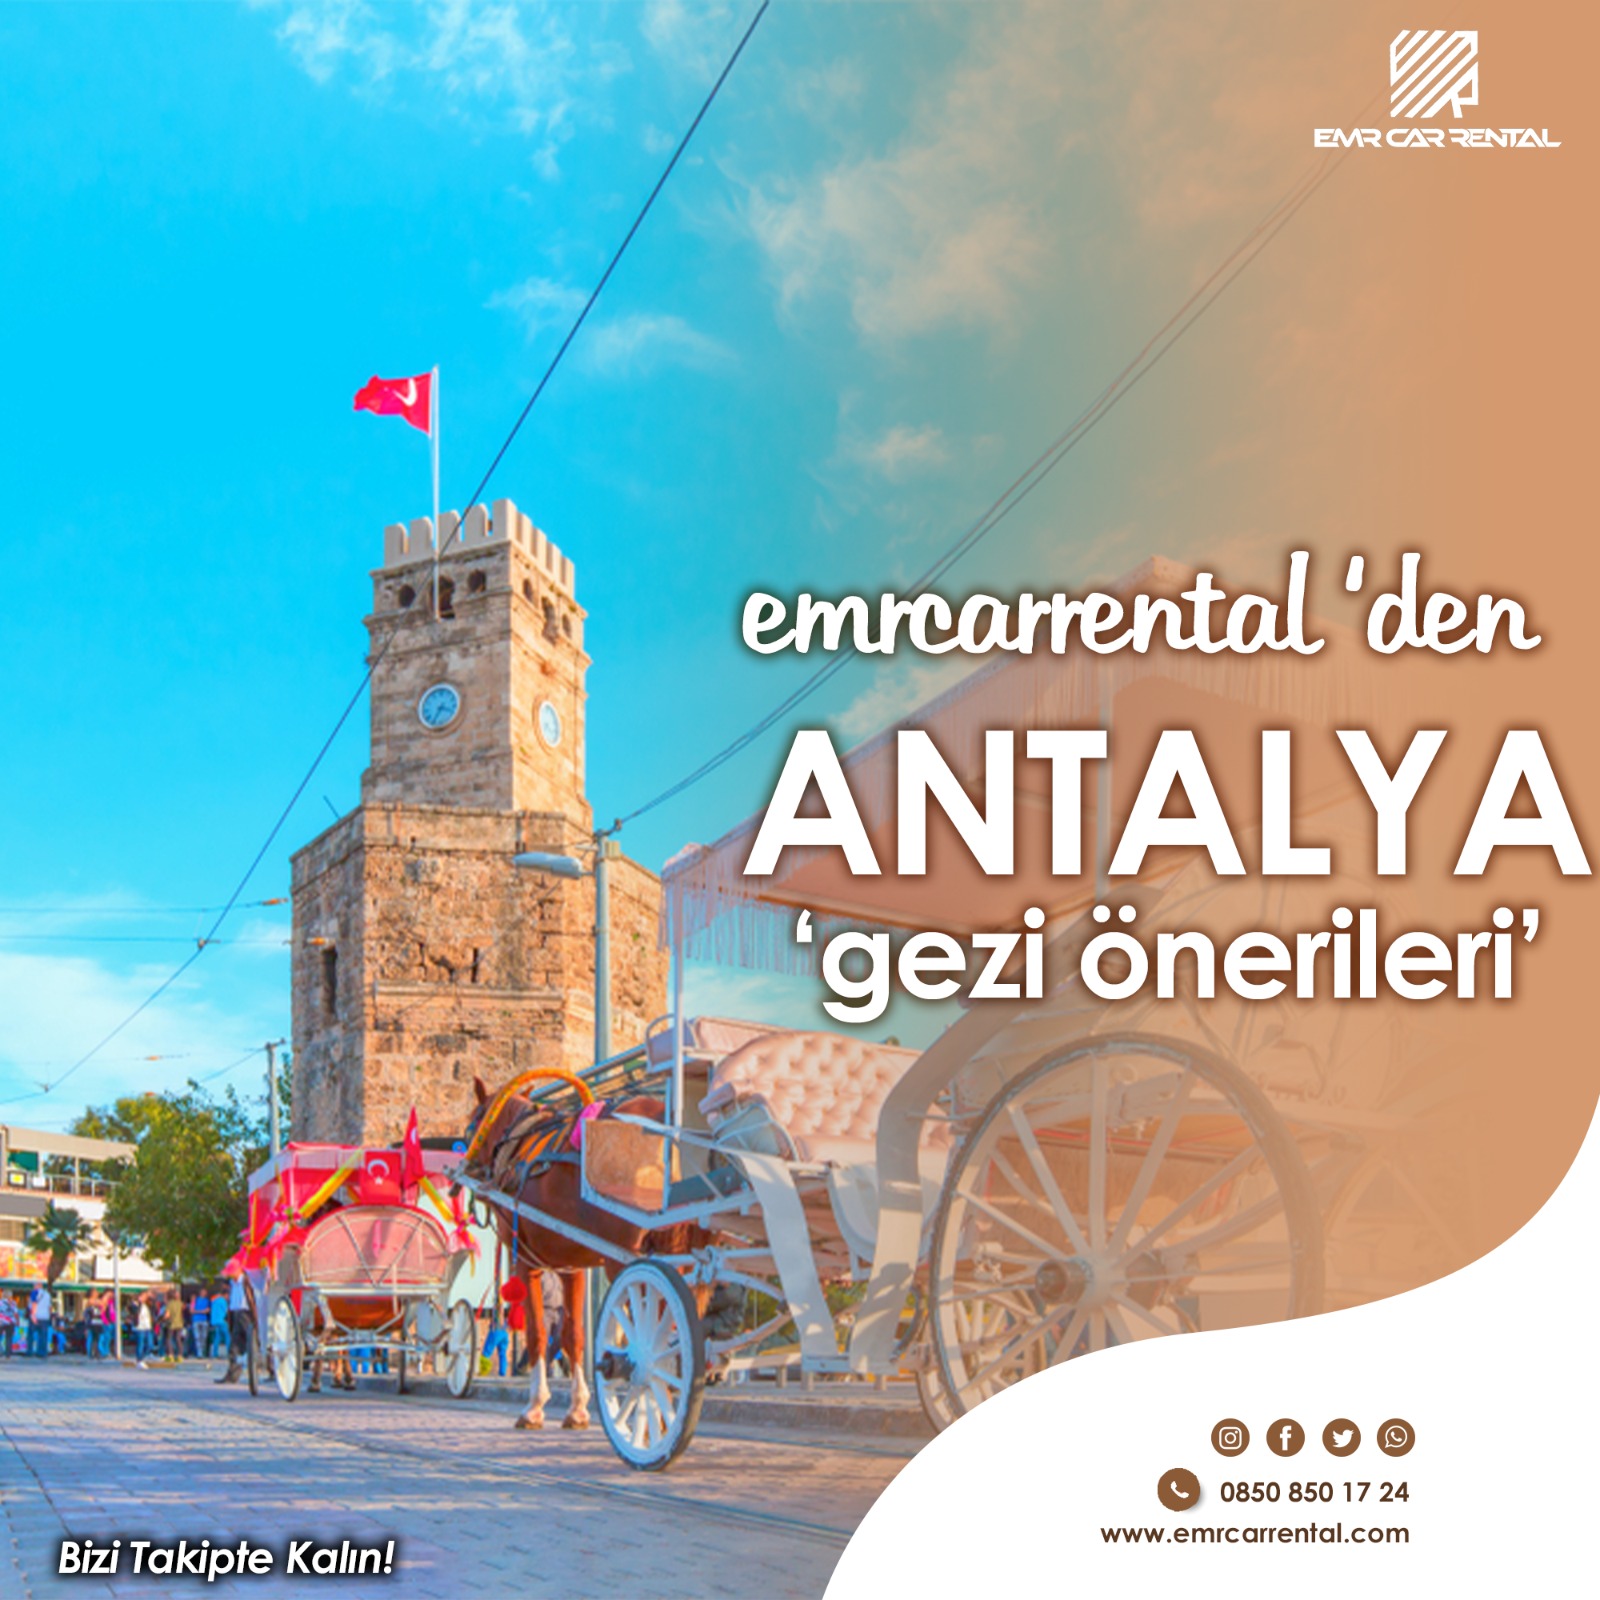 Emr Car Rental ile Antalya Gezisi